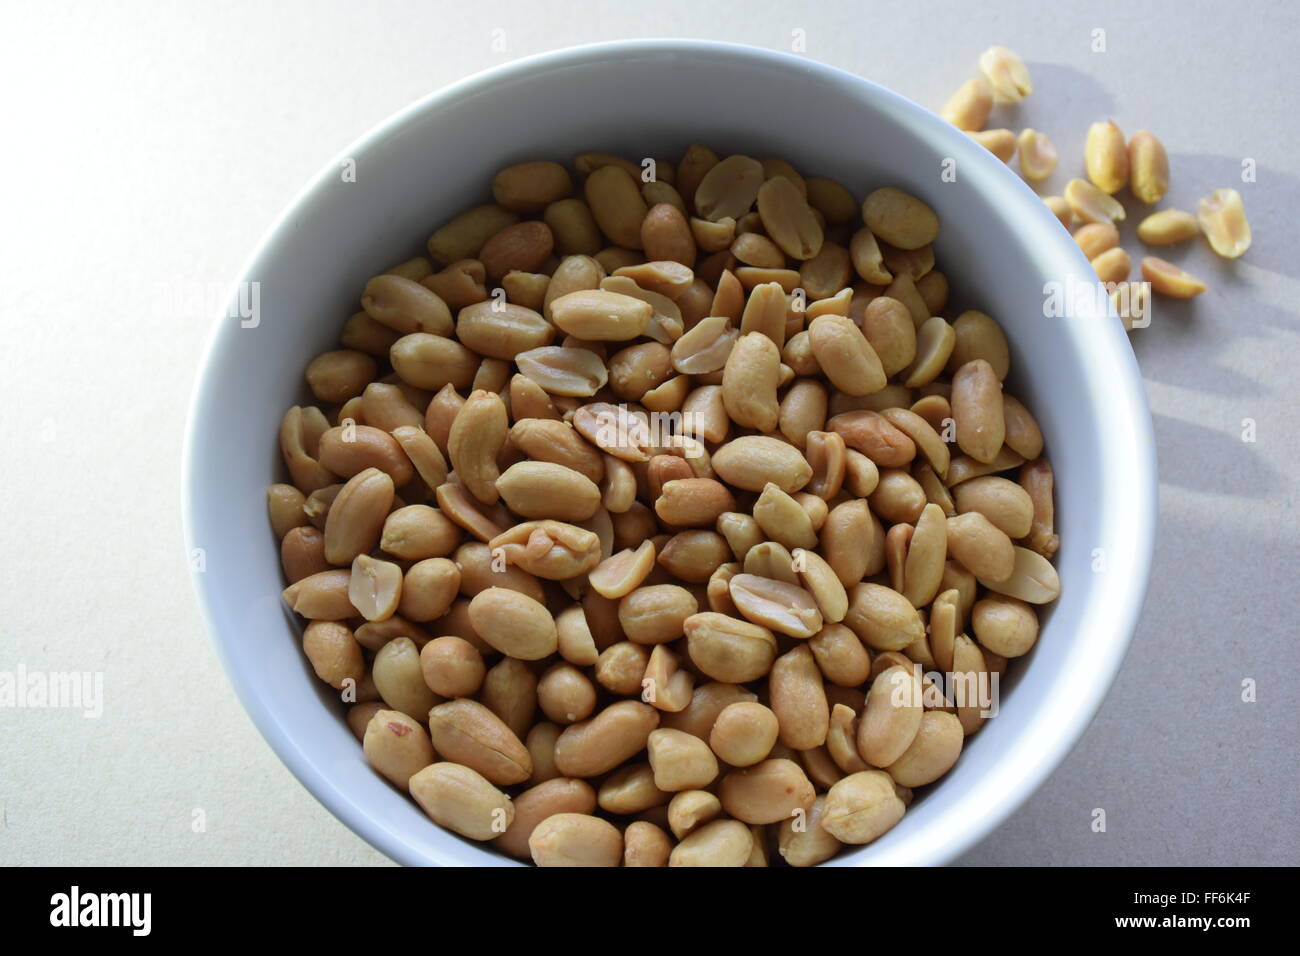 peanuts in a dish Stock Photo